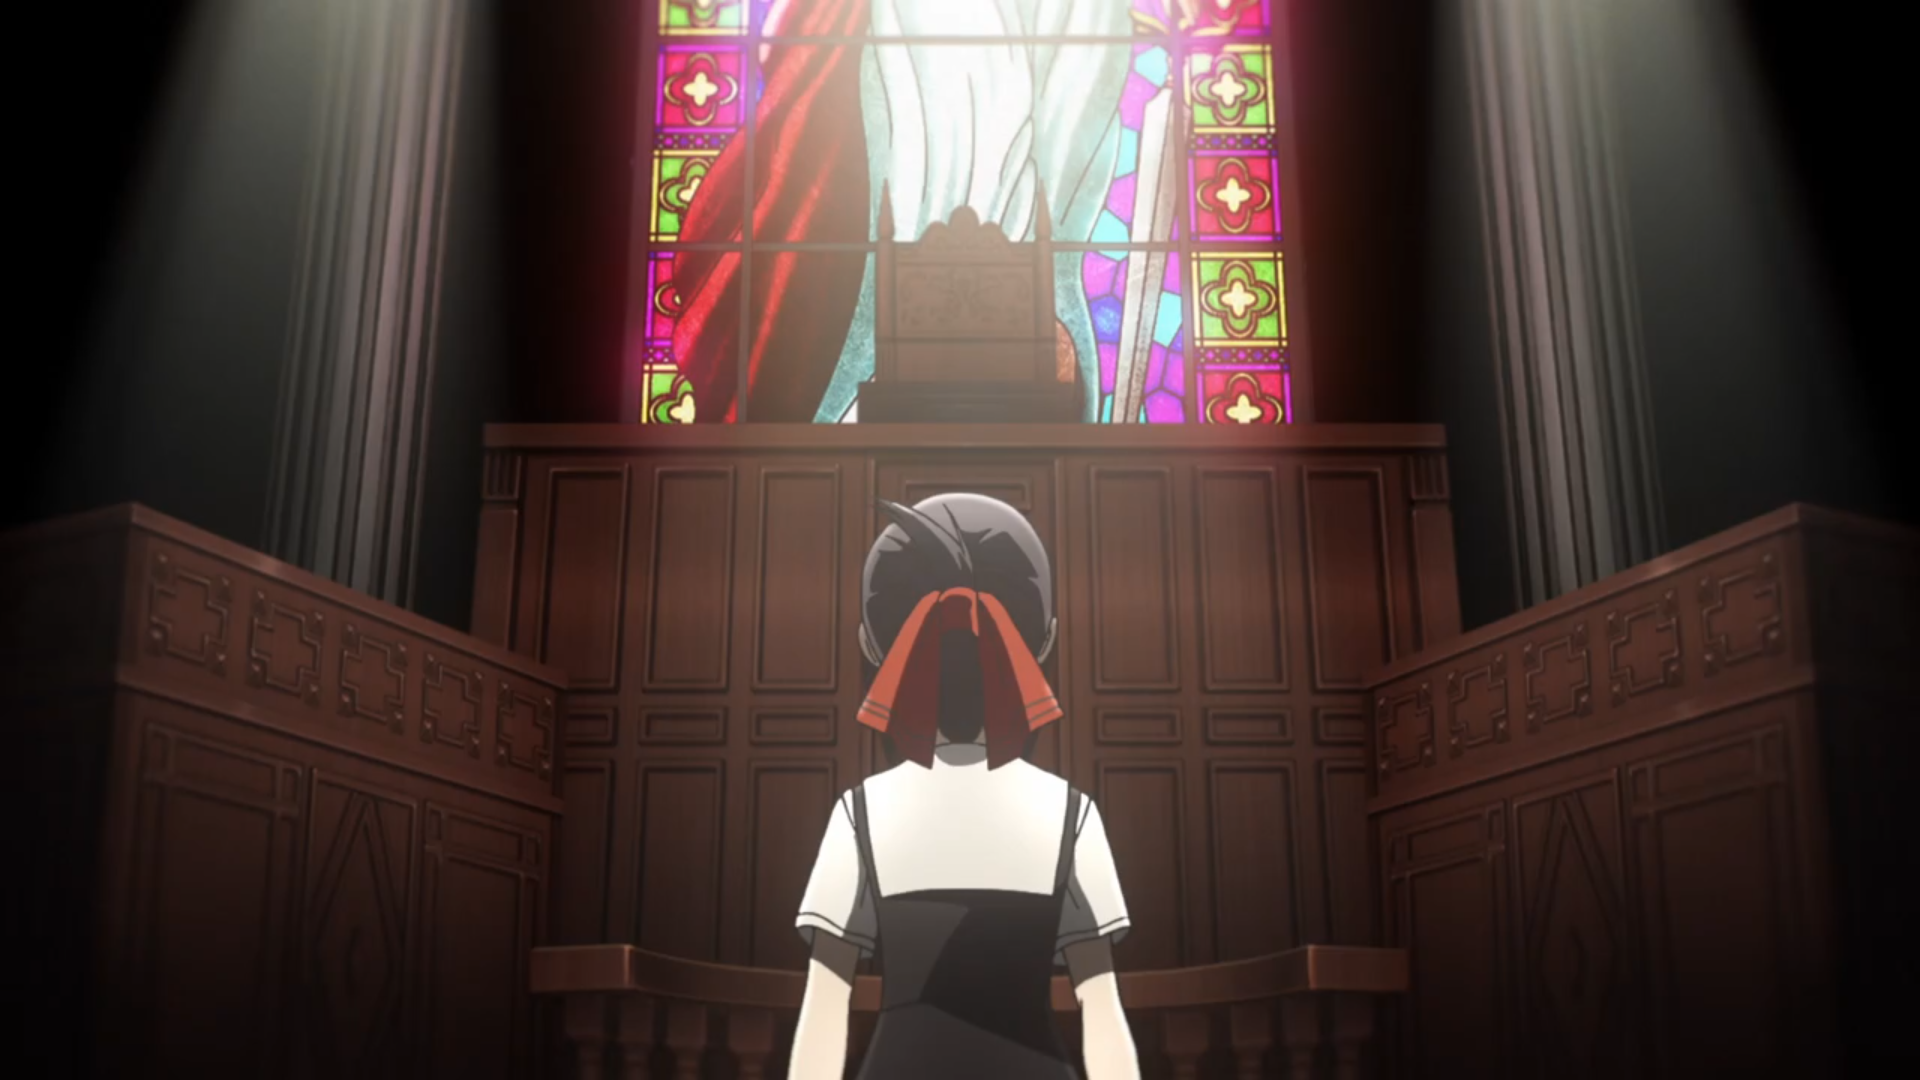 Kaguya-sama: Love is War Season 3 Reveals Episode 4 Preview - Anime Corner